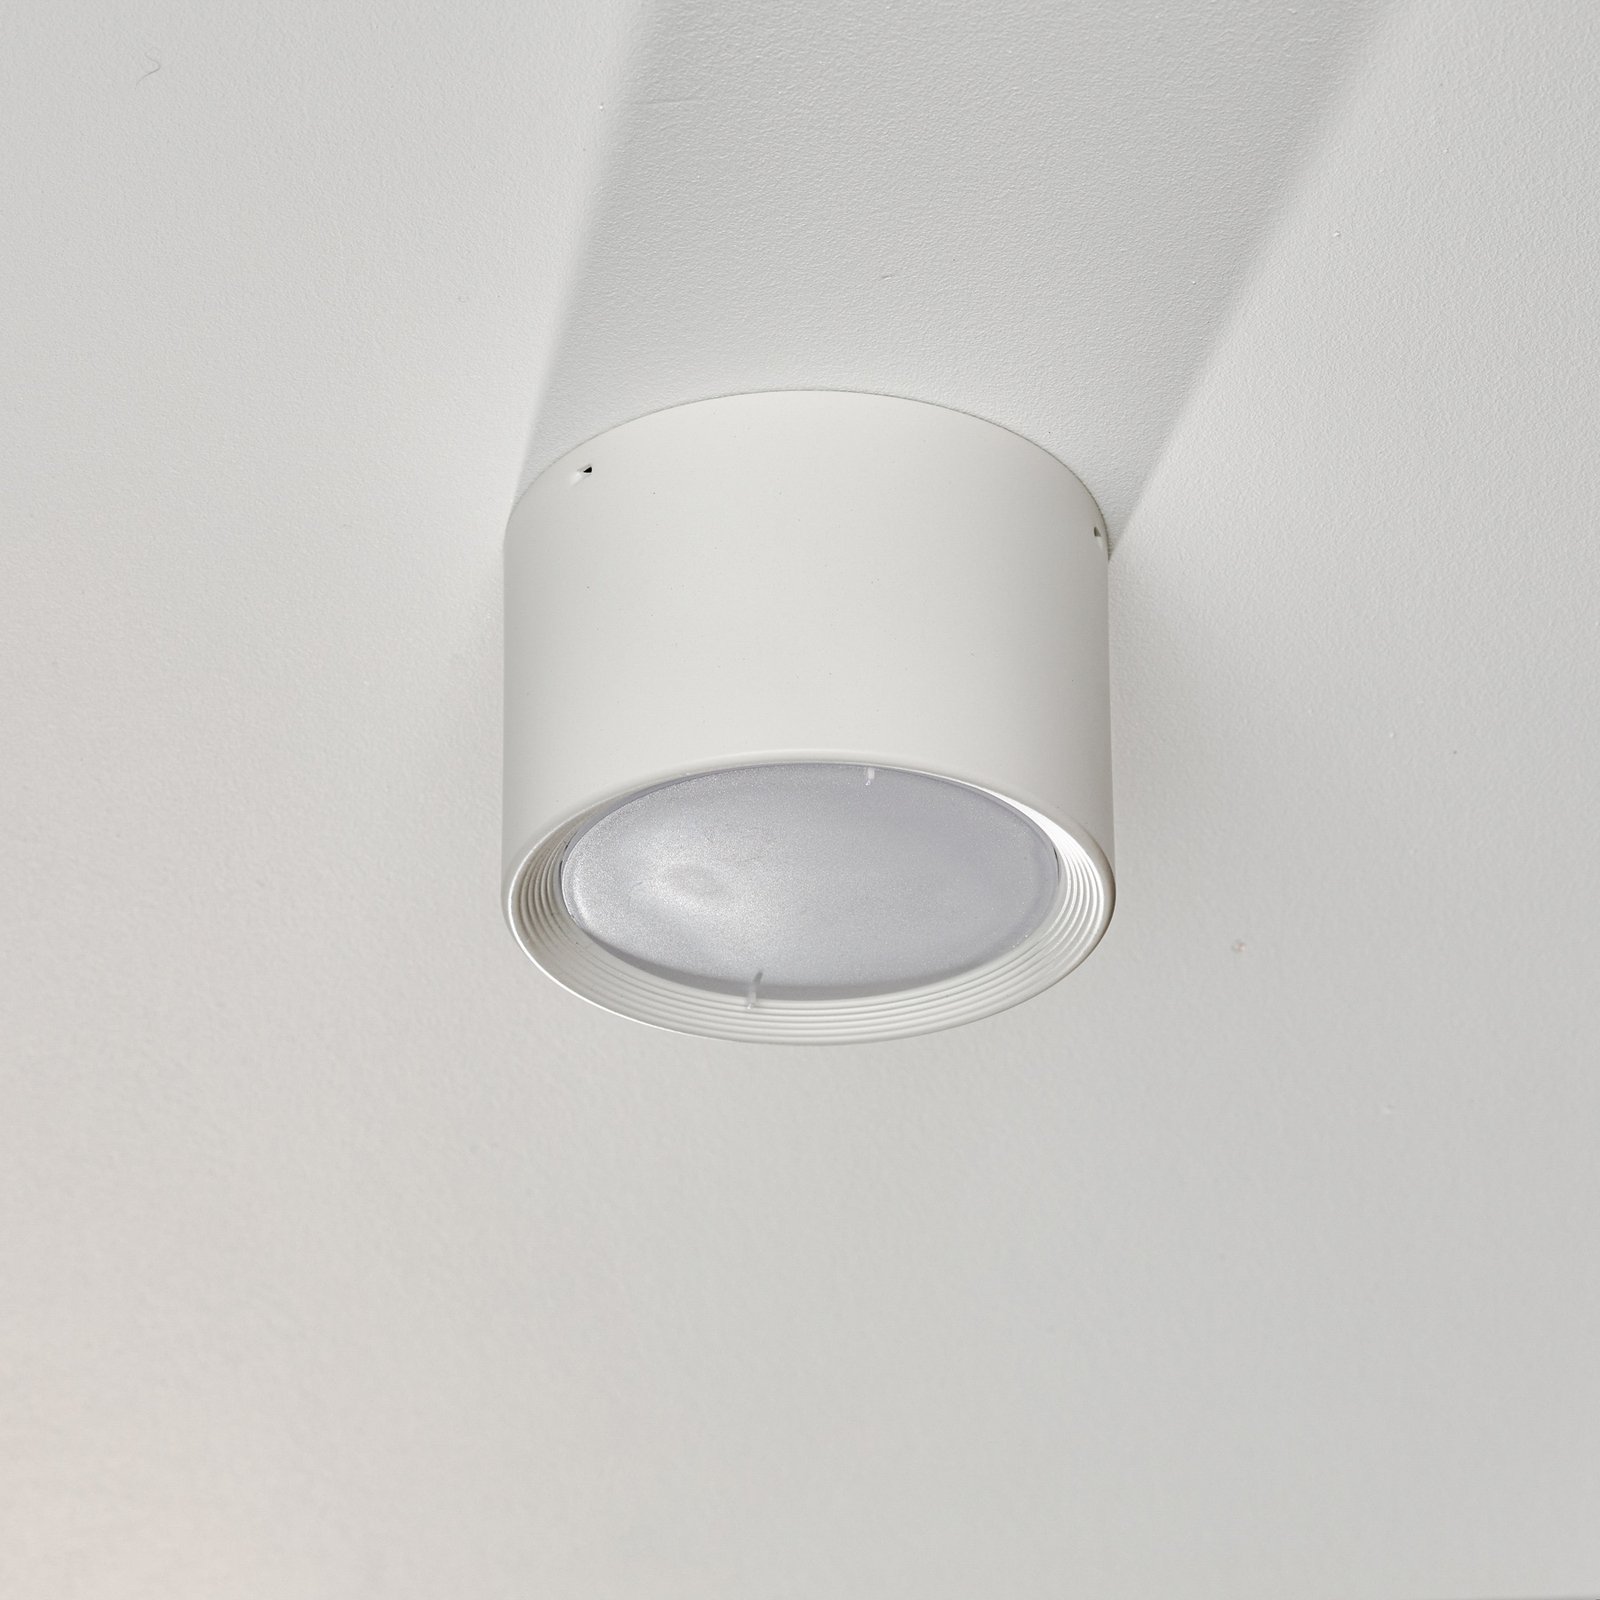 Ita LED downlight în alb cu dispersor, Ø 12 cm